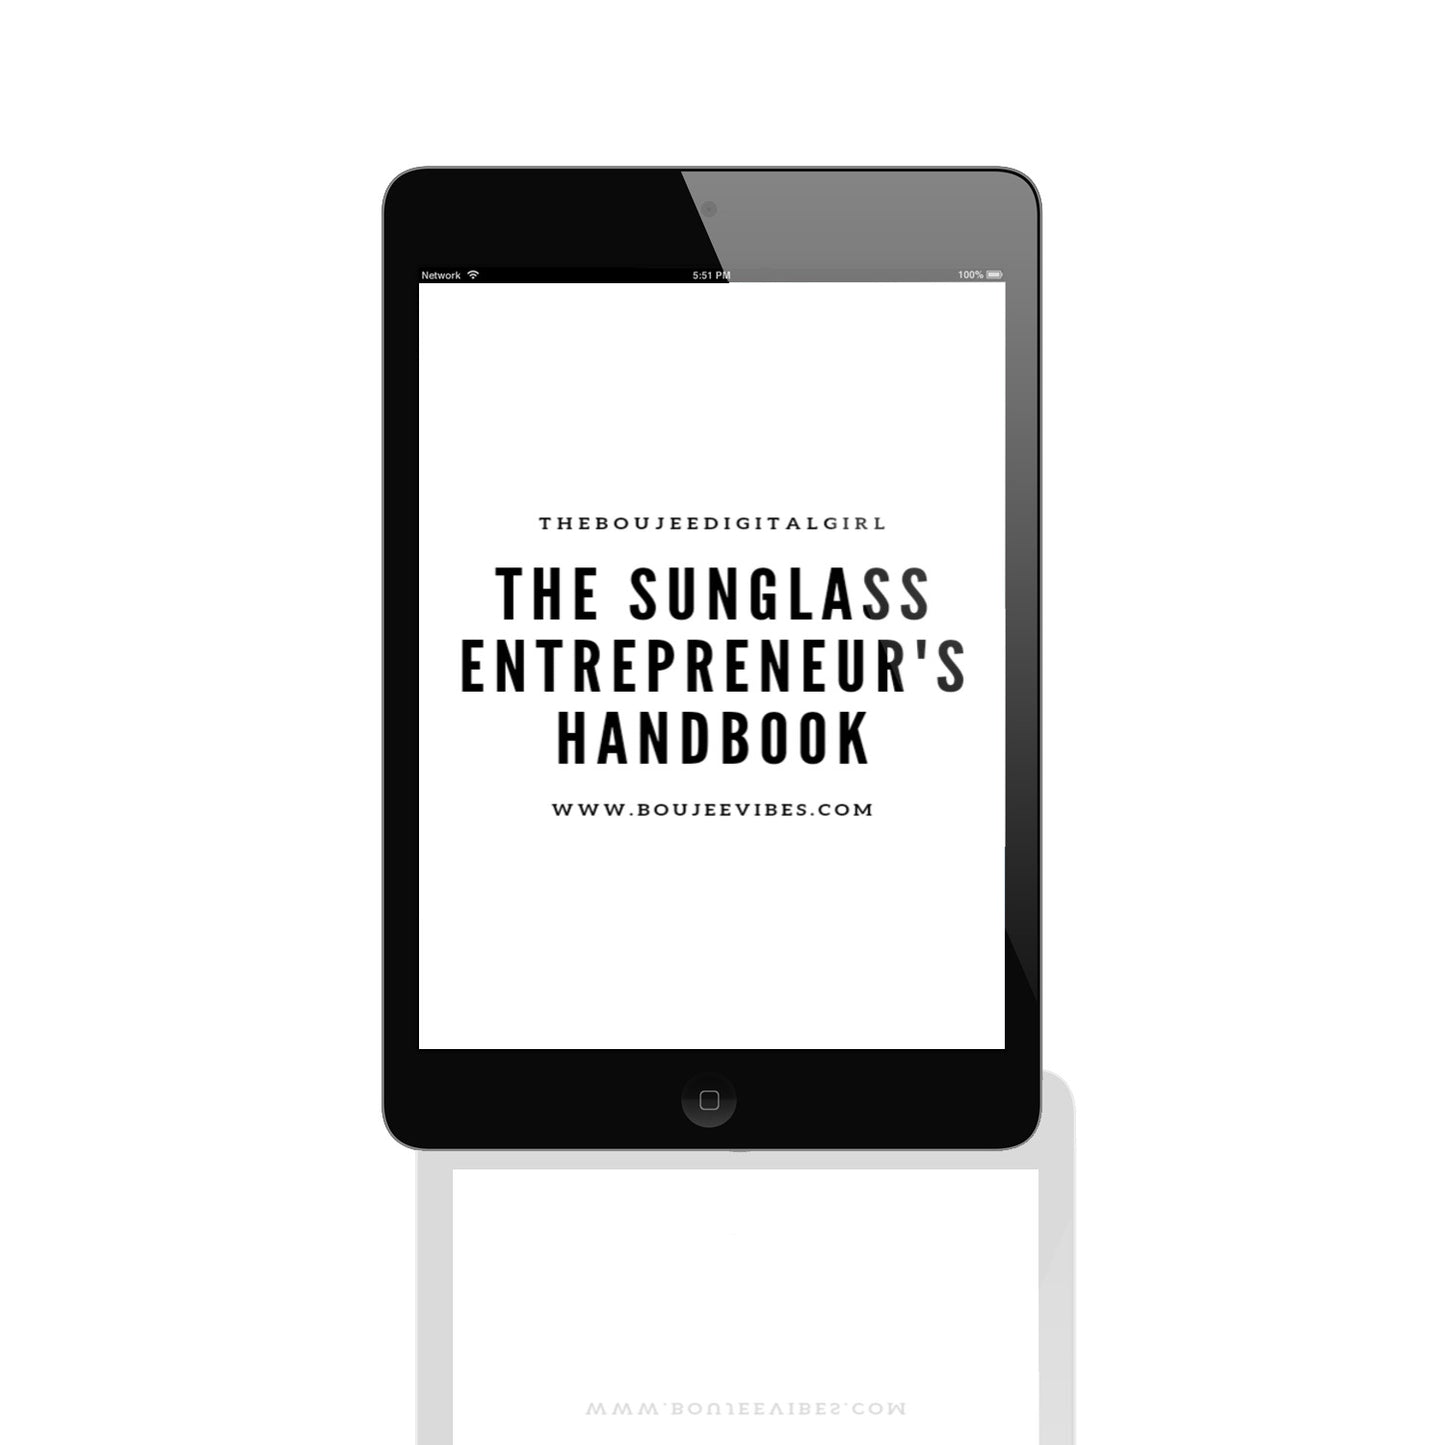 The Sunglass Entrepreneur's Handbook: A Blueprint for Launching Your Business Digitally